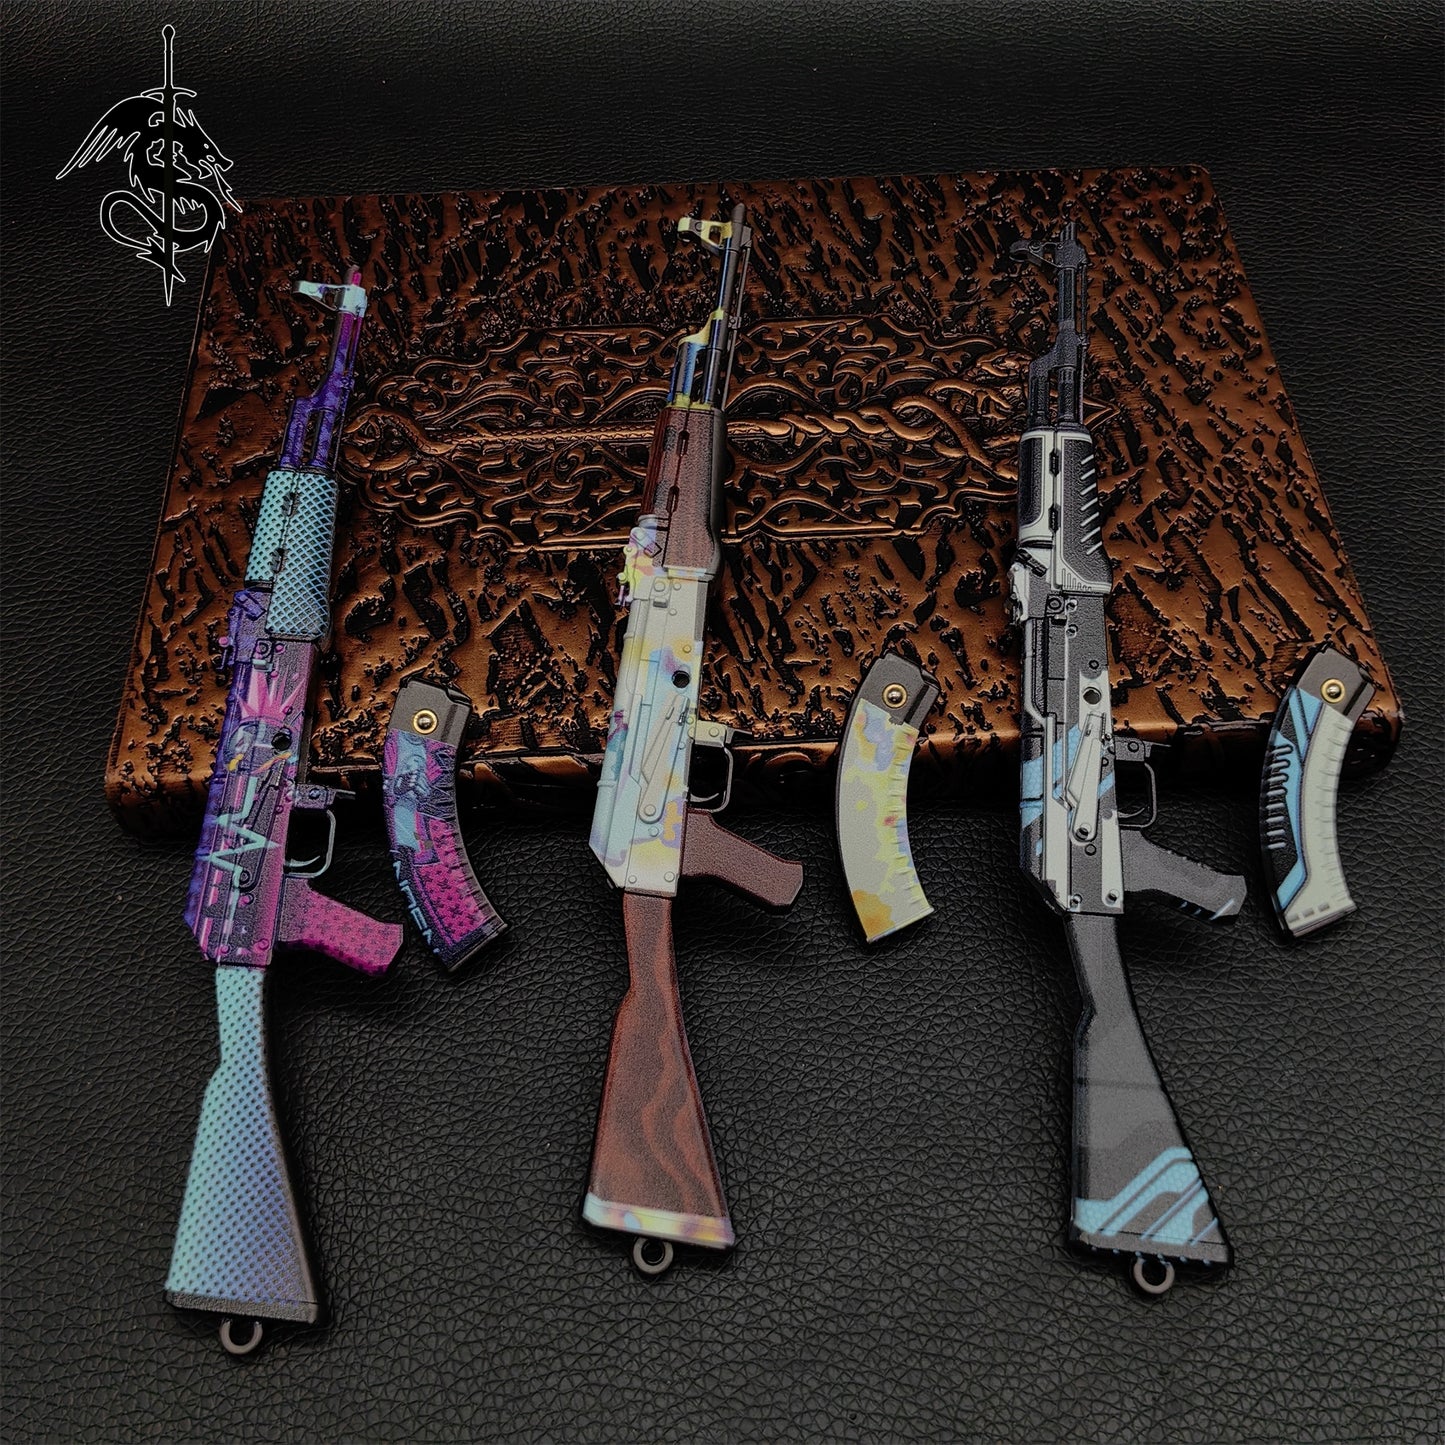 AK-47 Neon Rider Case Hardened And Vulcan Skin Gun Model  3 In 1 Pack